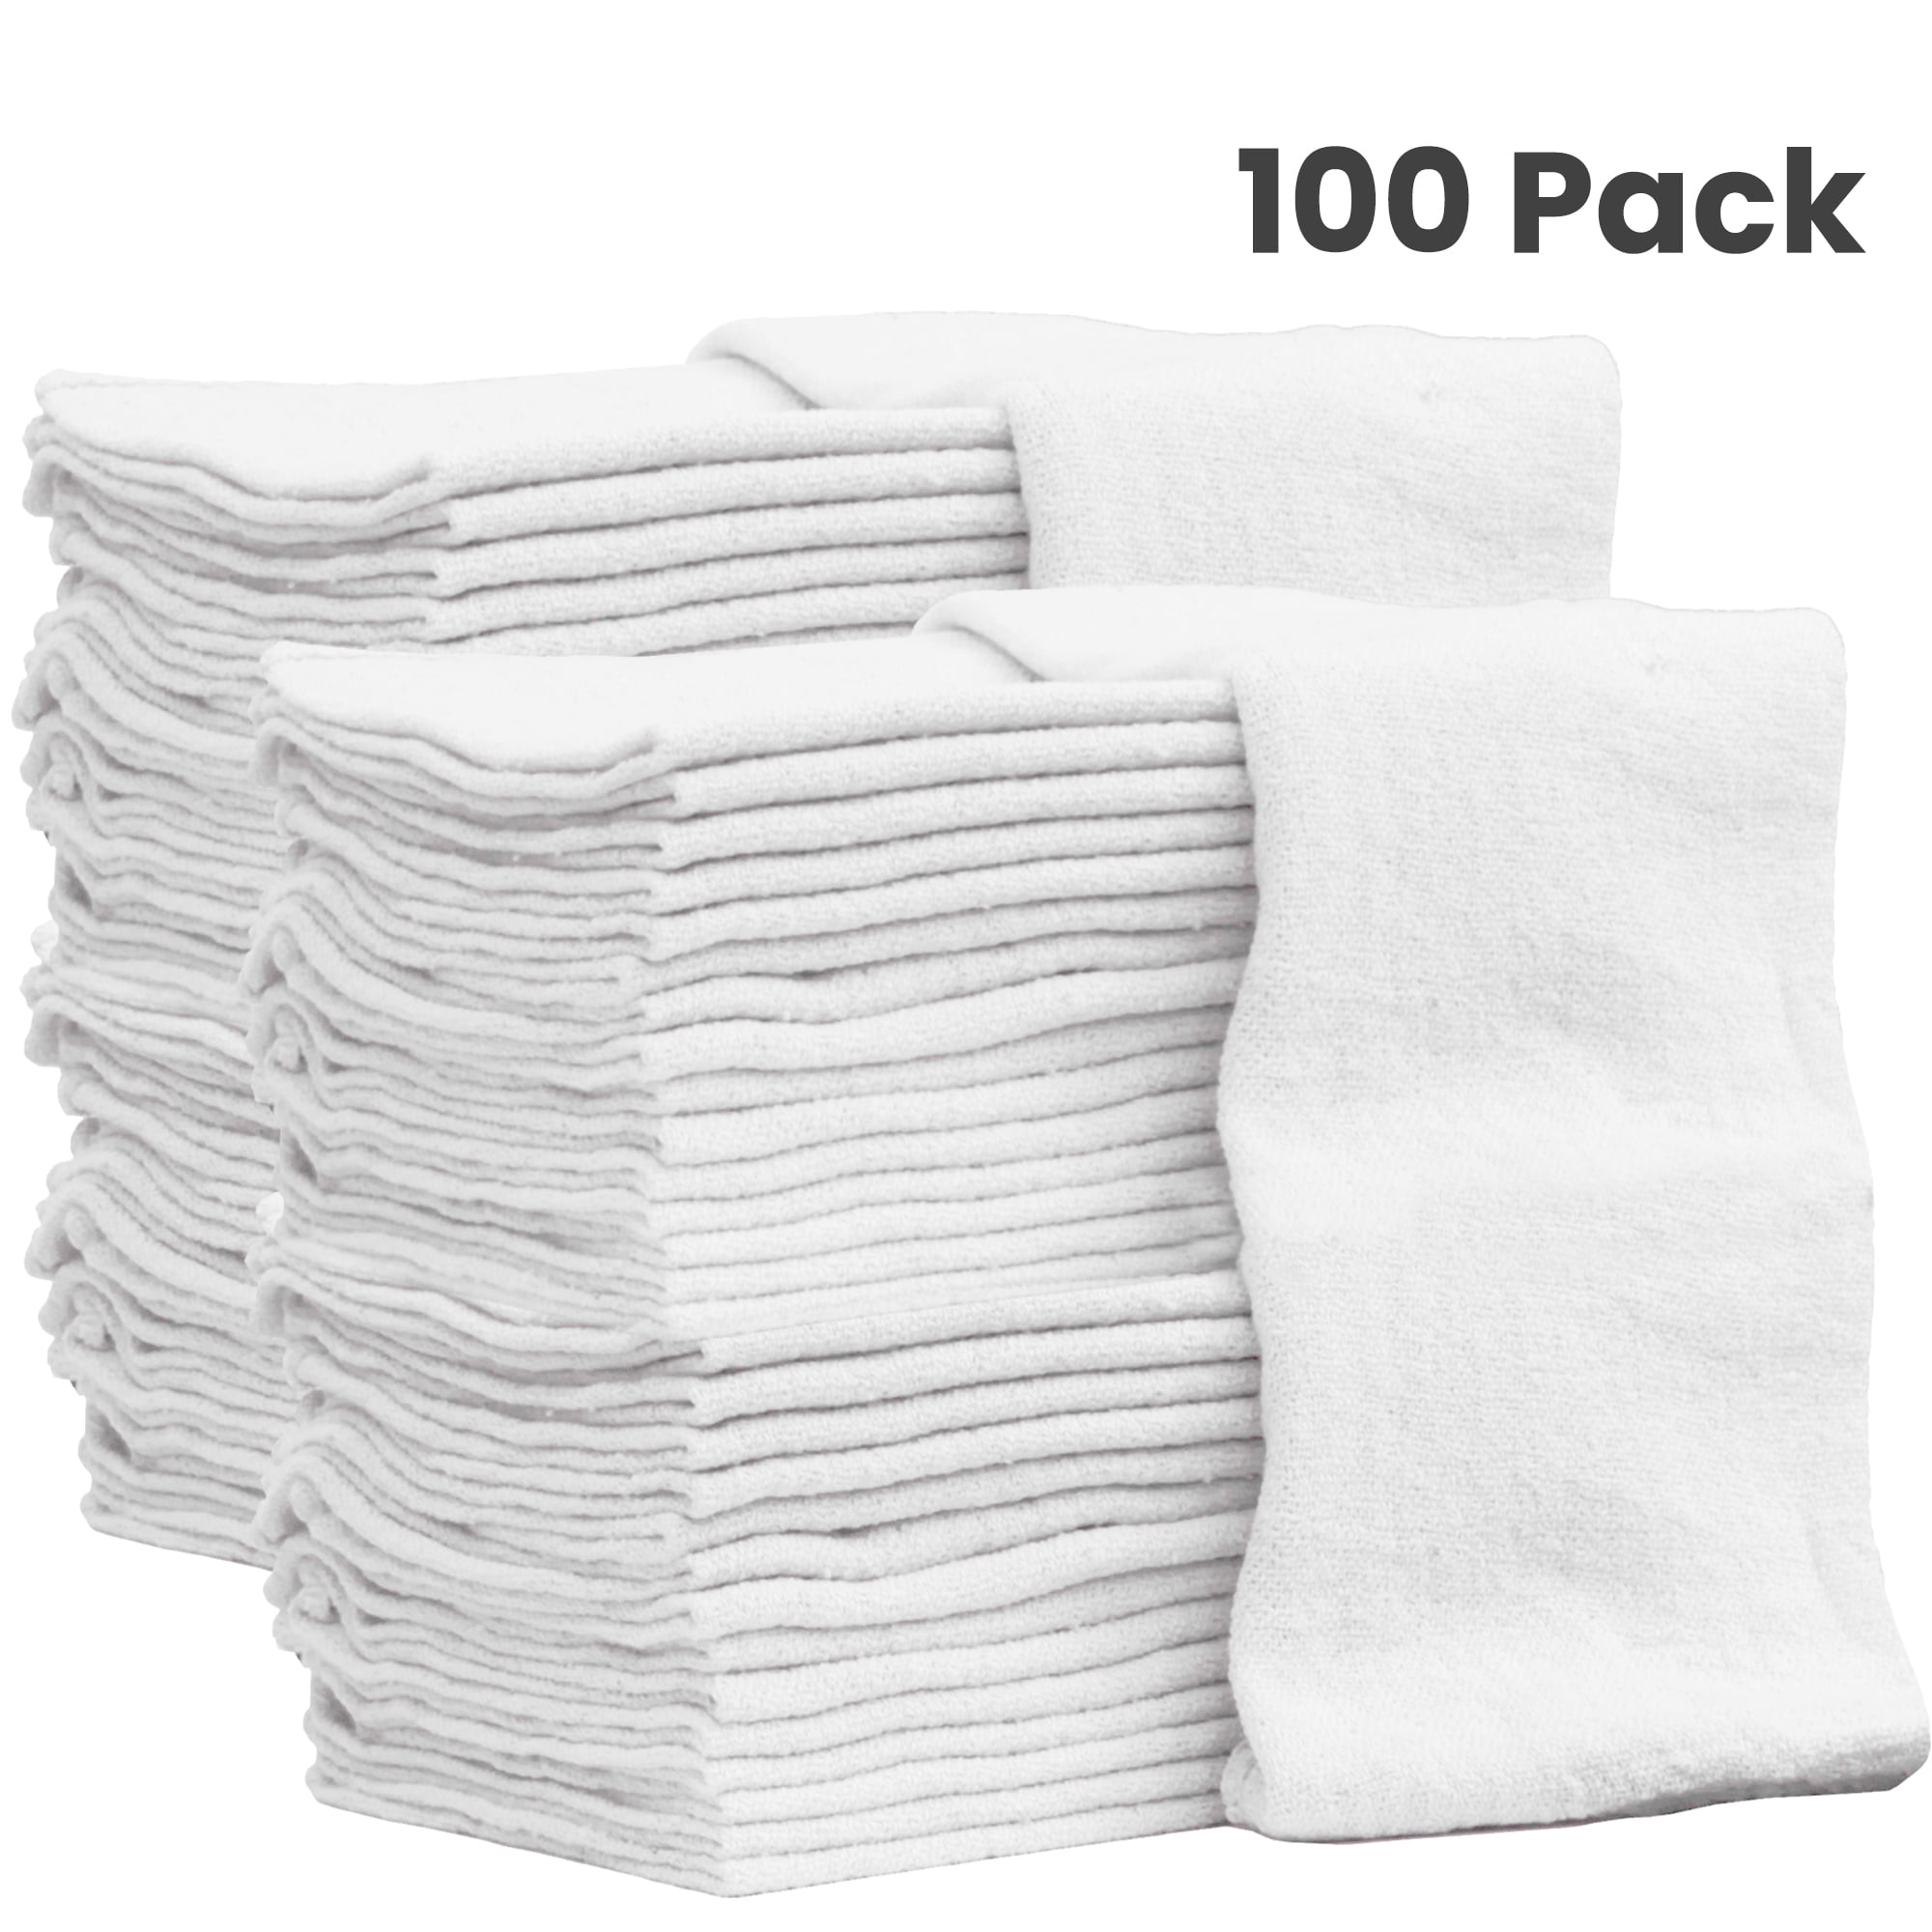 Shop Rags 100% Cotton Commercial Grade Perfect for Your Garage Auto Body Shop White 13x14 12 Pack SupremePlus Auto-Mechanic Shop Towels 